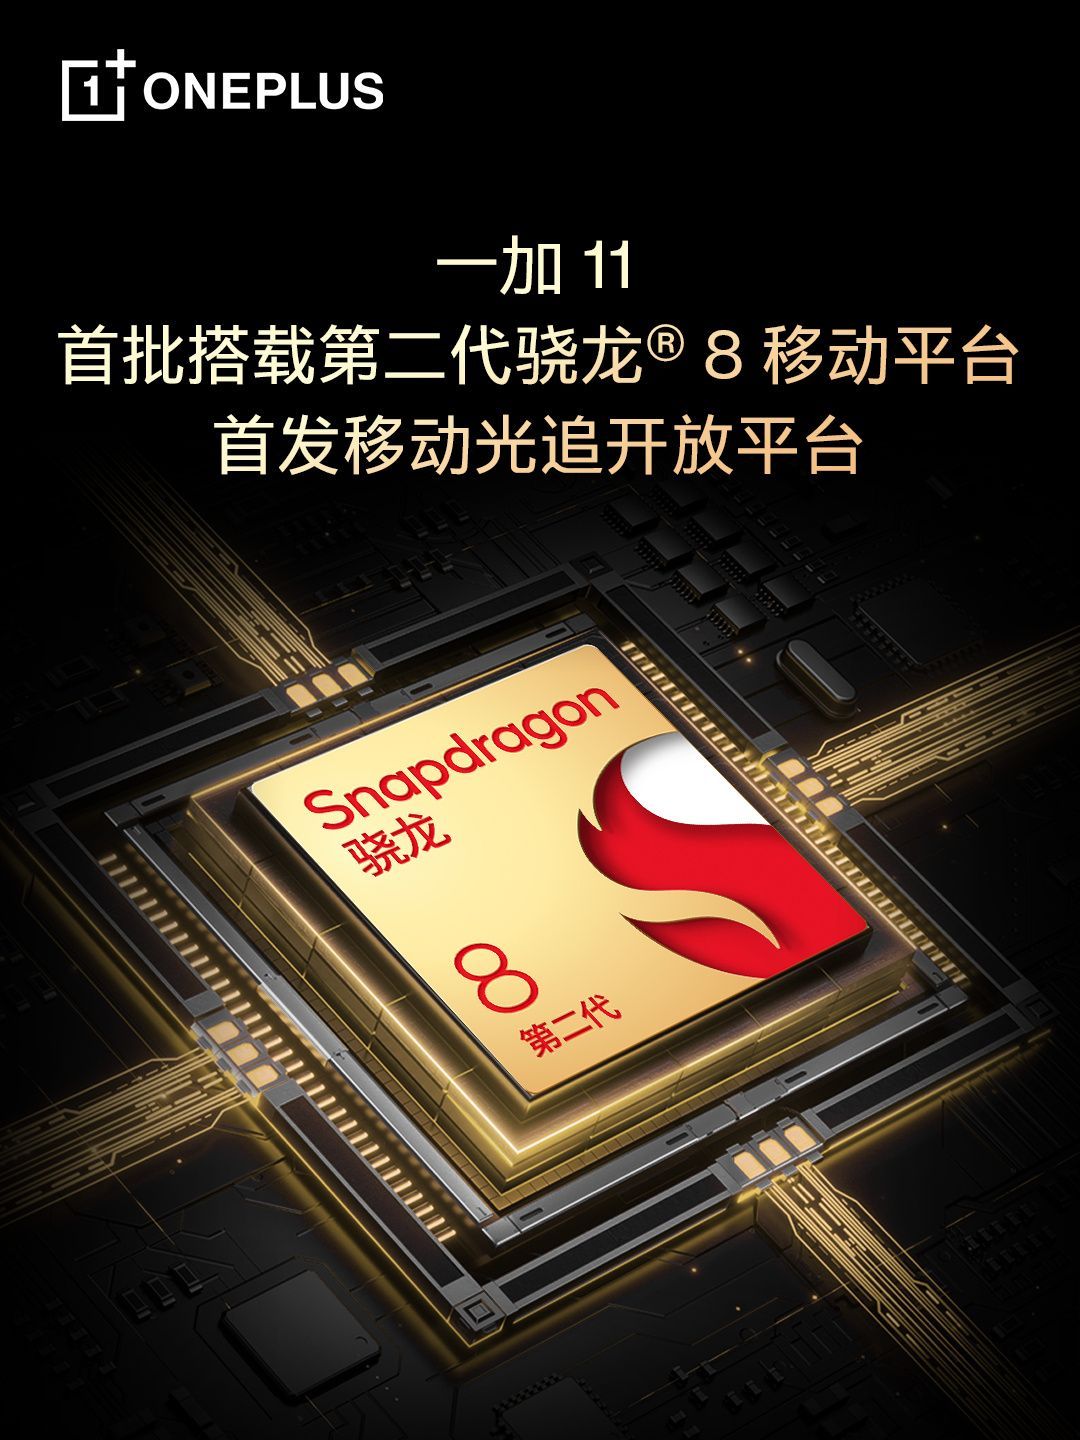 OnePlus-11-Snapdragon-8-Gen-2-announcement-poster